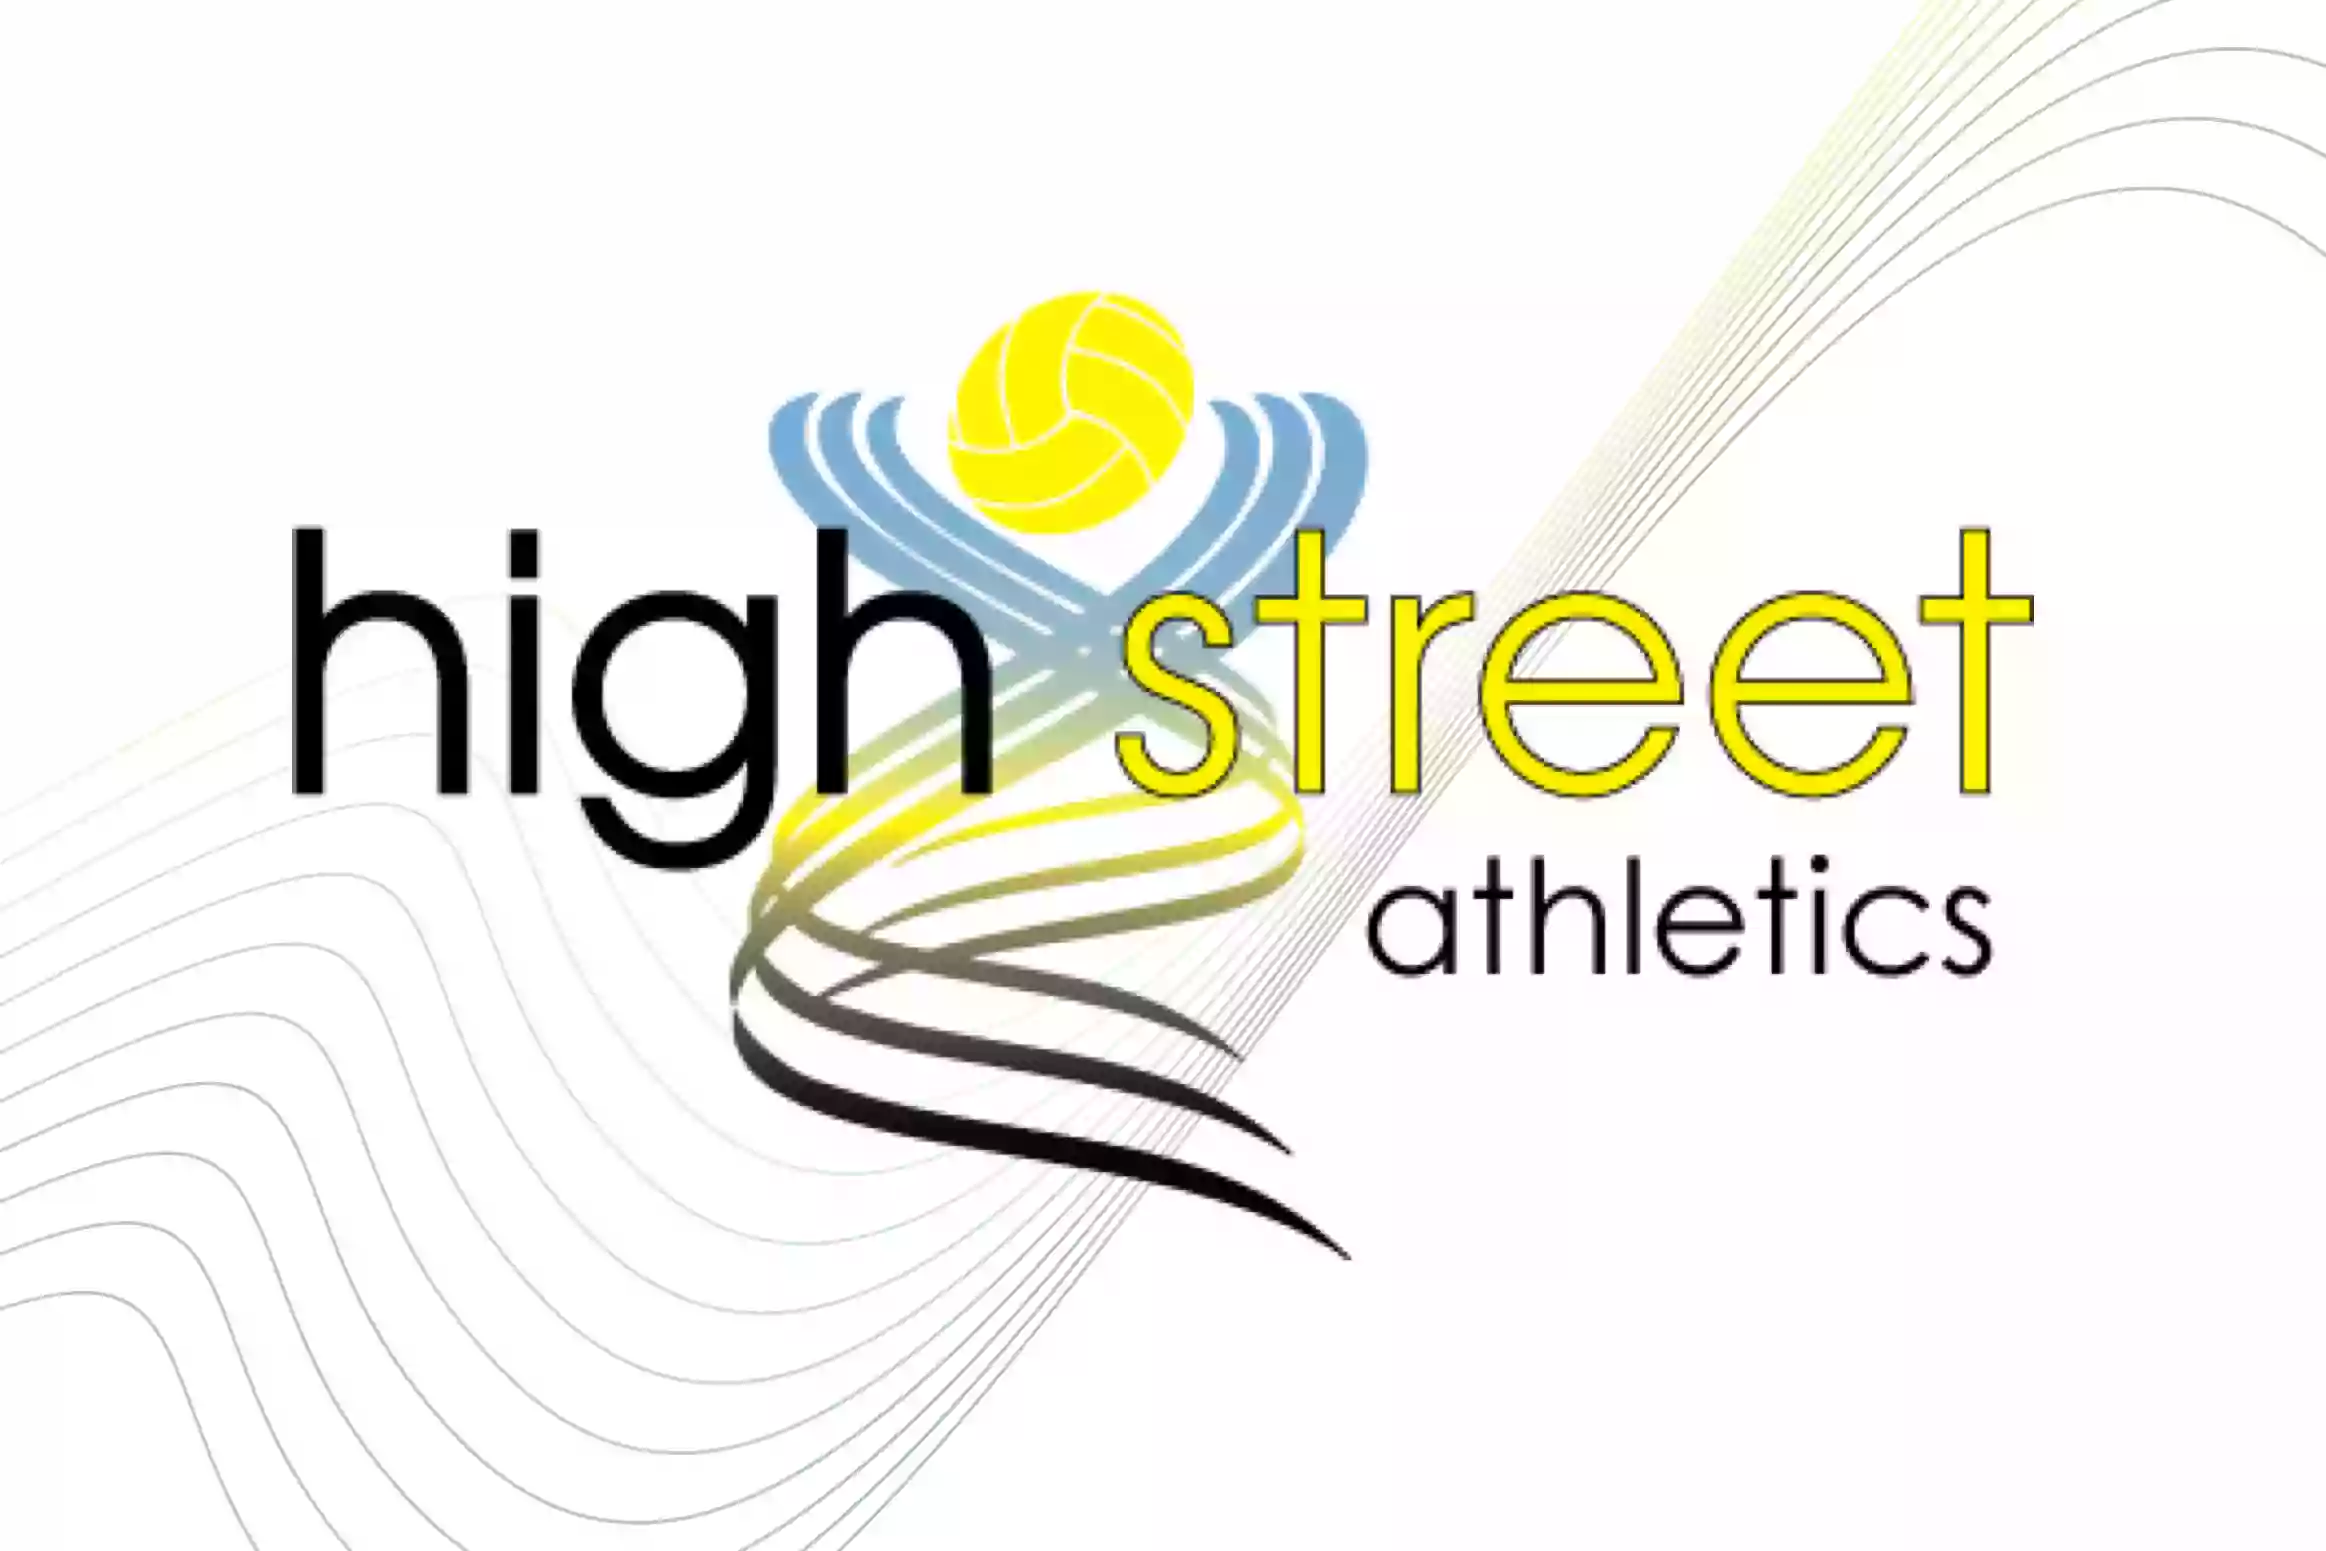 High Street Athletics